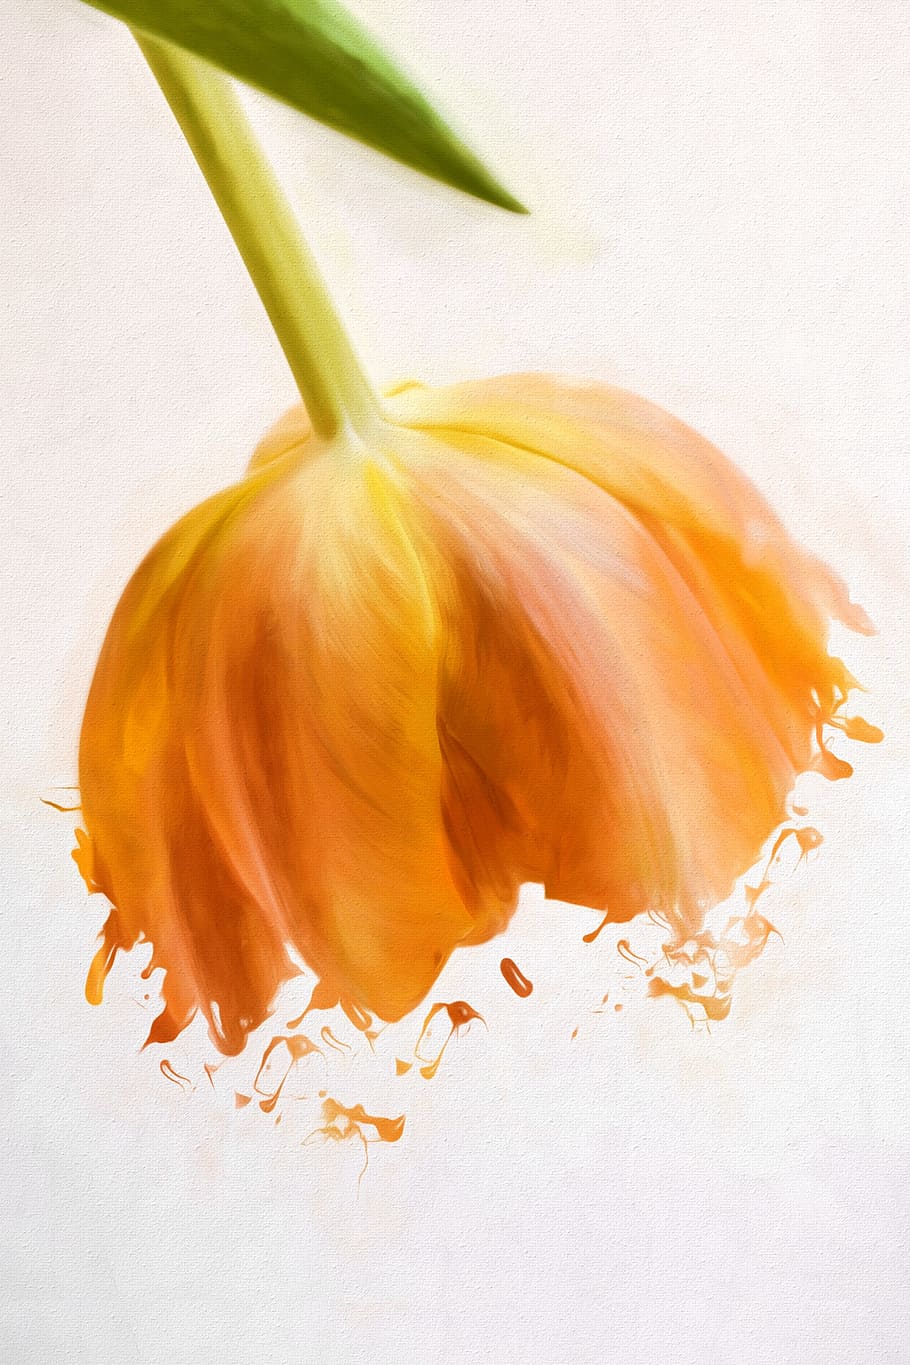 Image, Painting, Painted, Tulip, Flower, orange, orange flower, paint, spring flower, orange spring flower